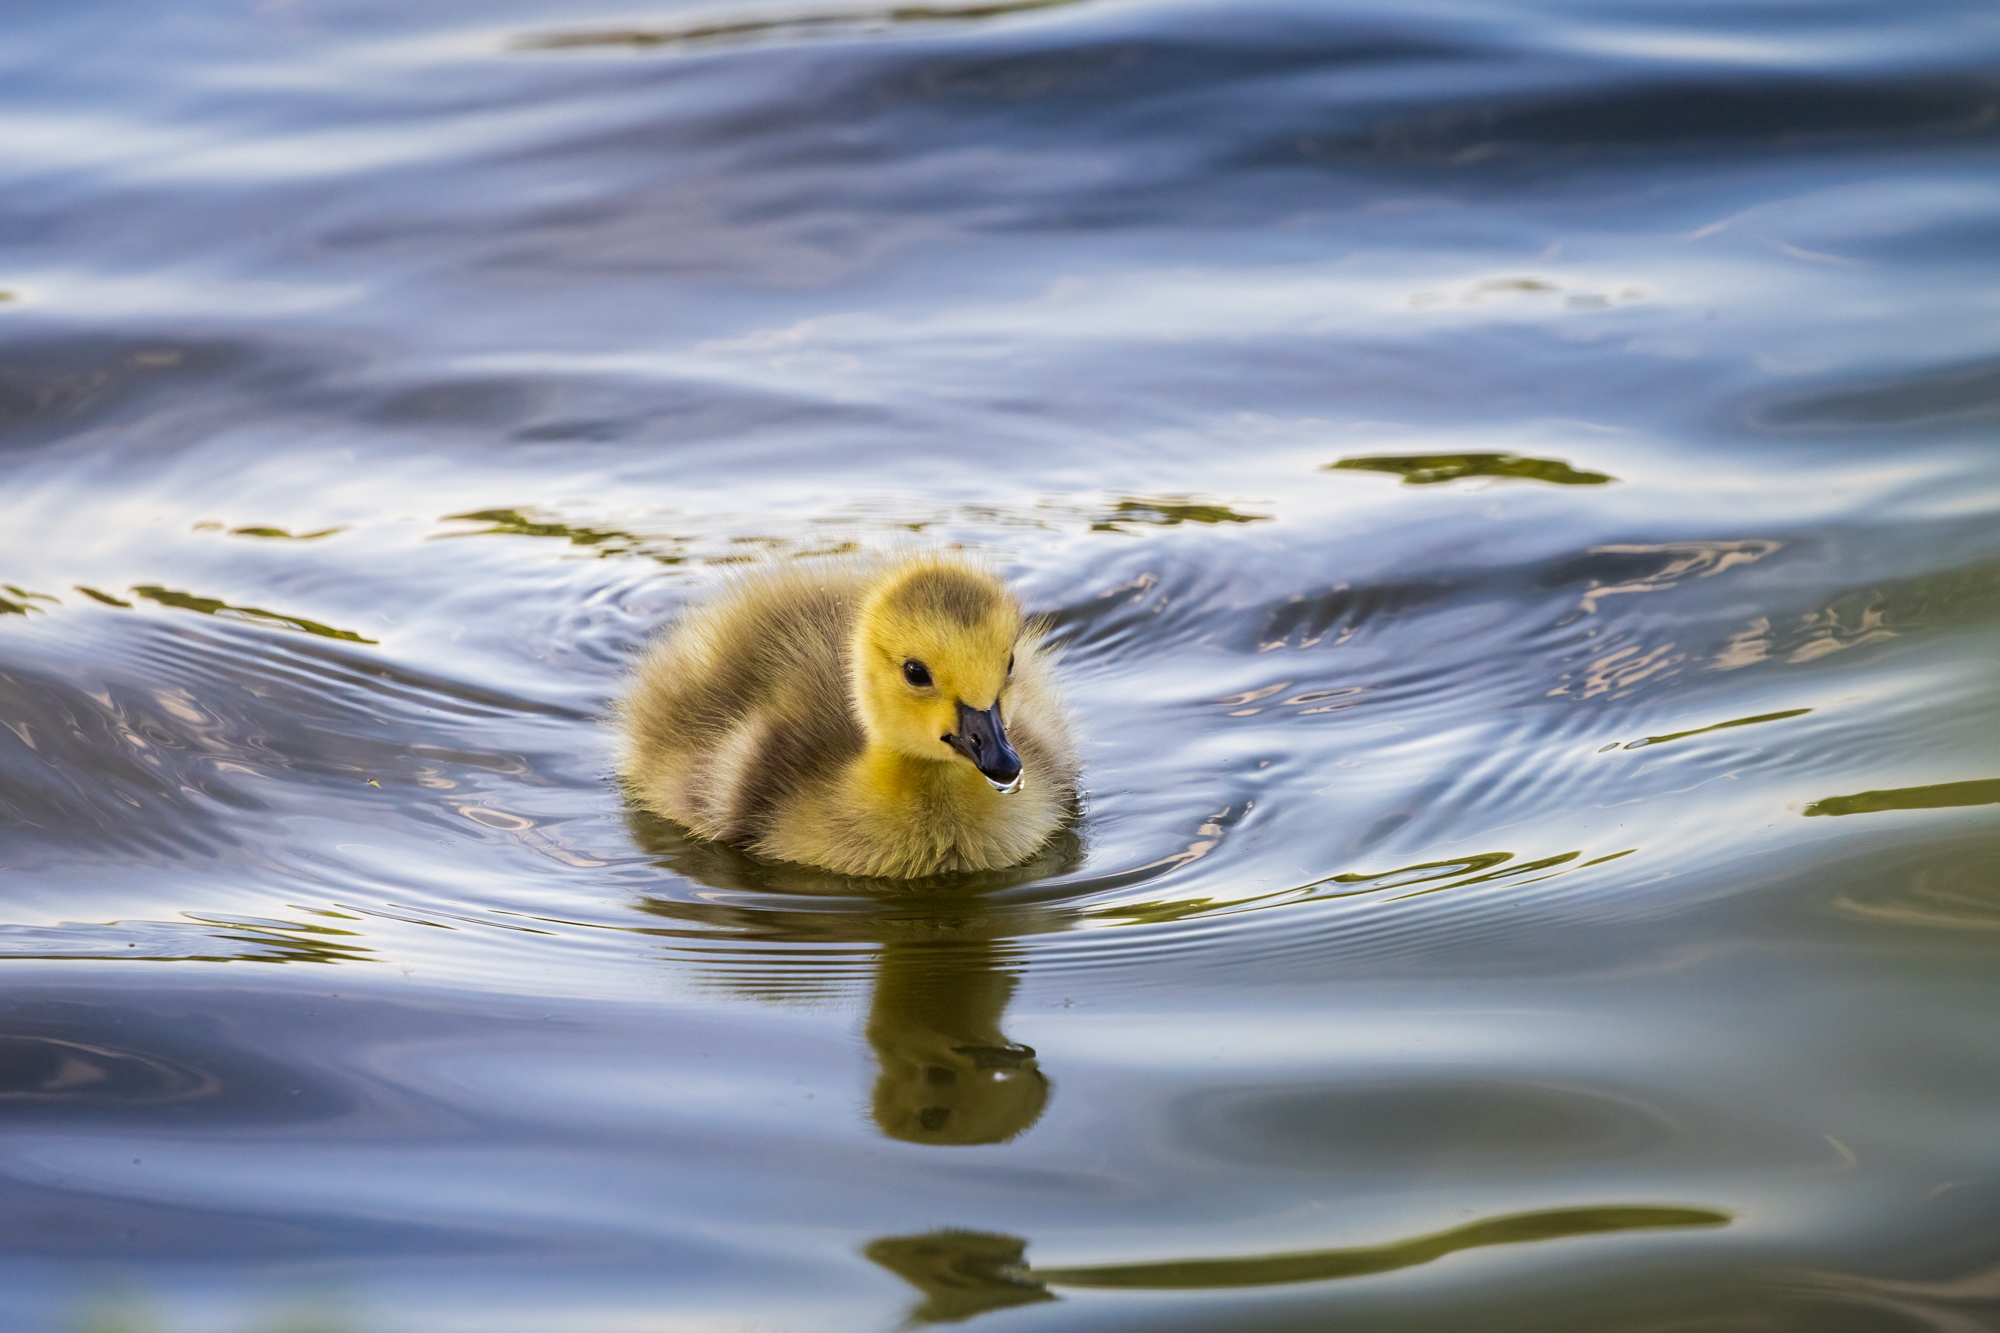 Mallard duckling swimming in the water,